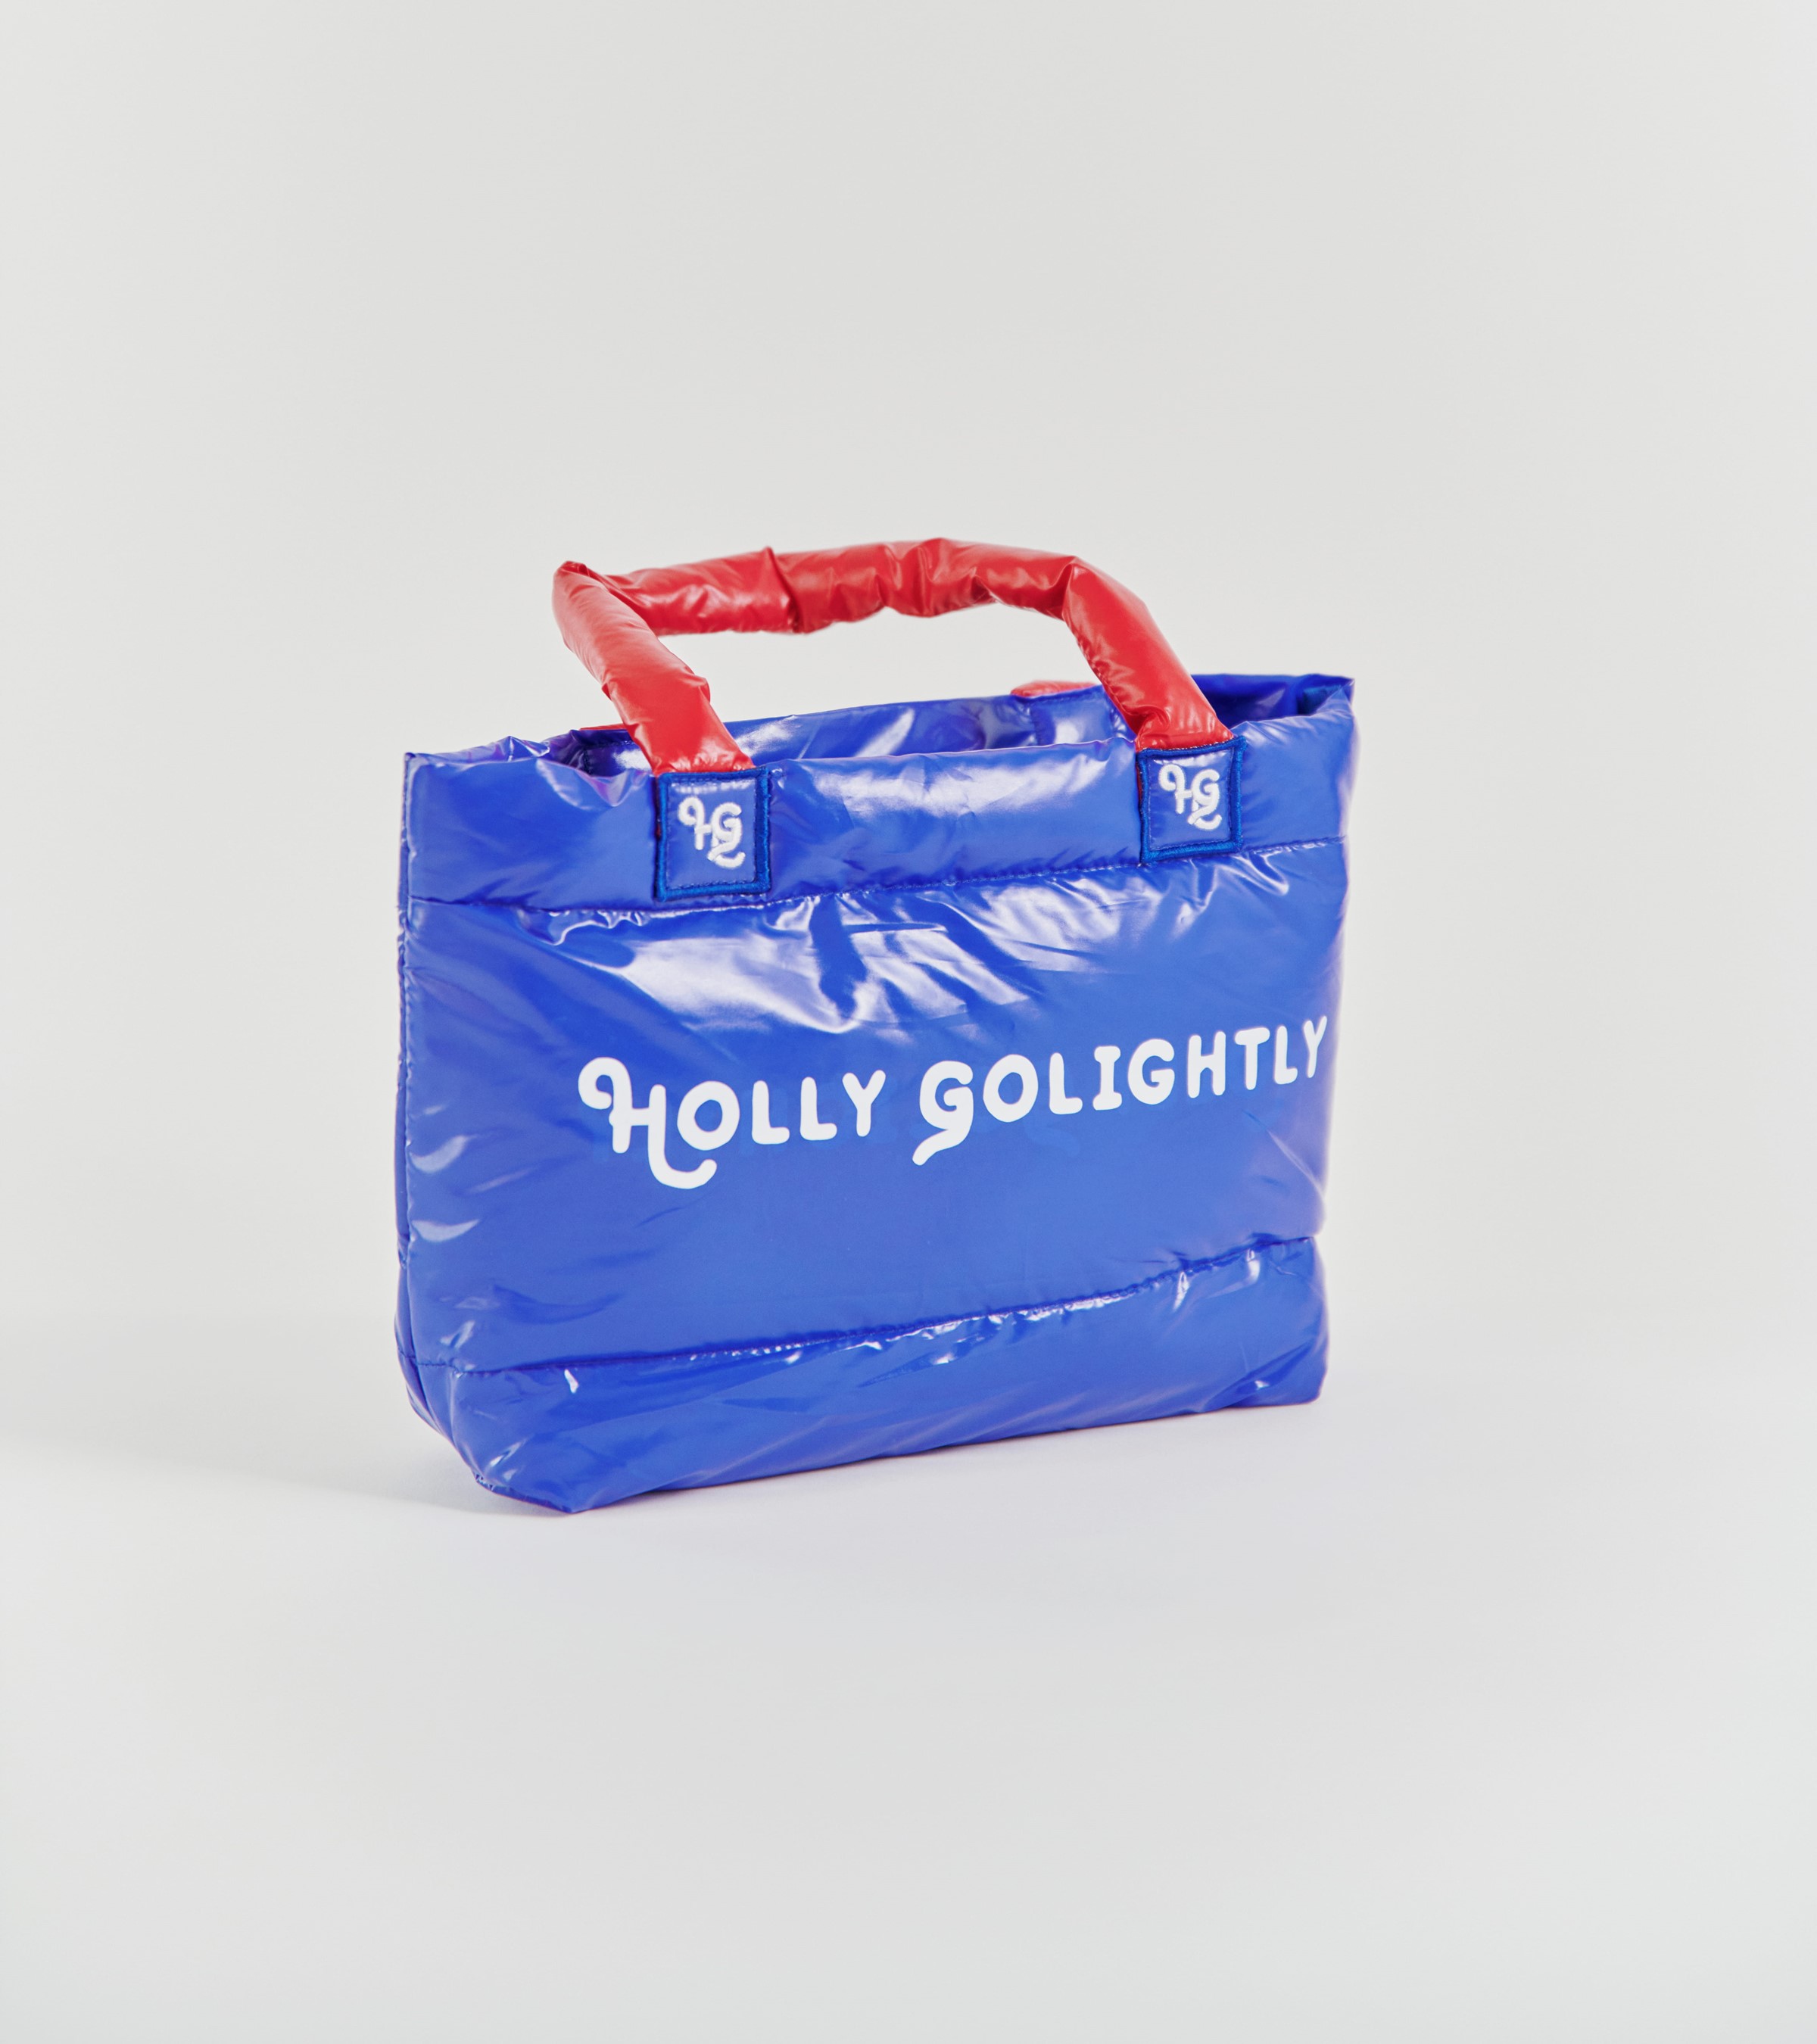 Holly Golightly bag in Nylon